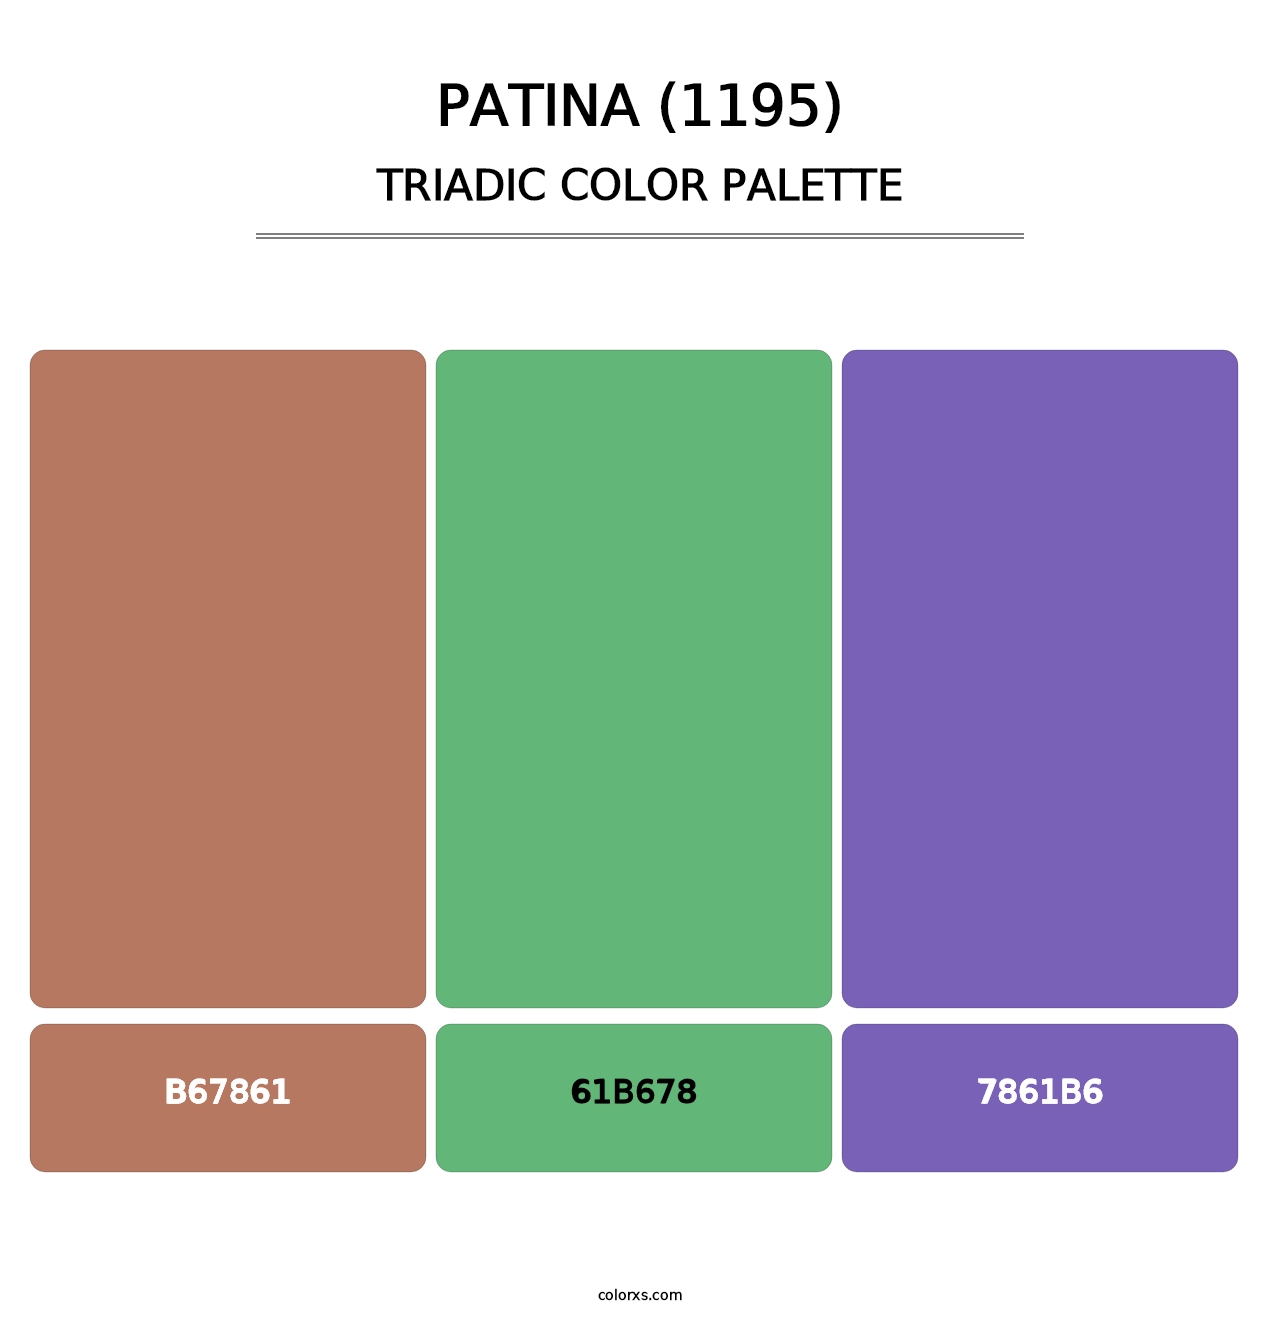 Patina (1195) - Triadic Color Palette